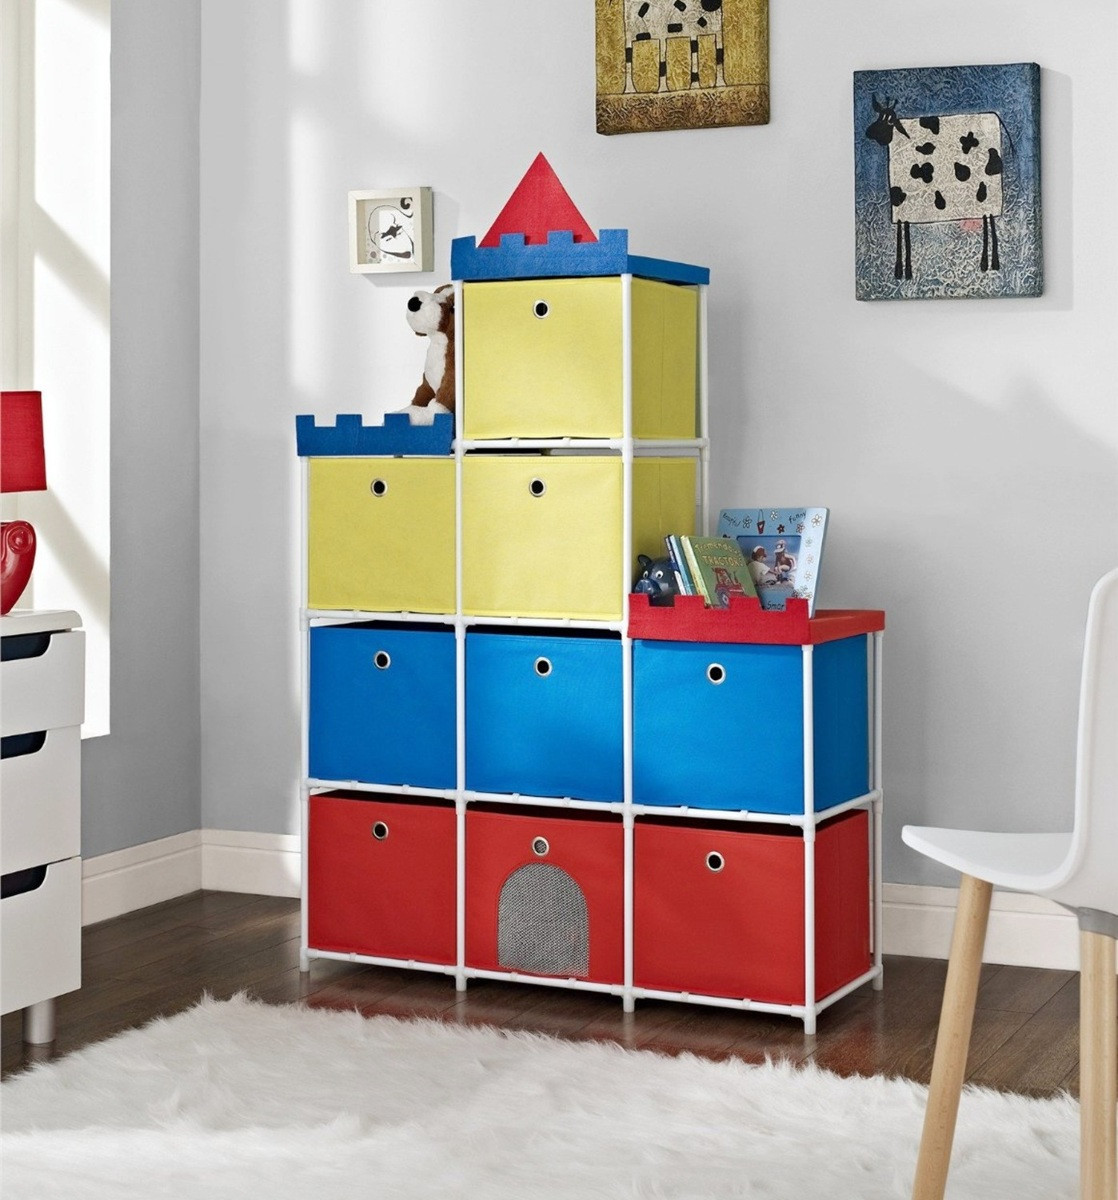 Child Storage Furniture
 Altra Furniture 9 Bin Kids Storage Unit w Castle Theme